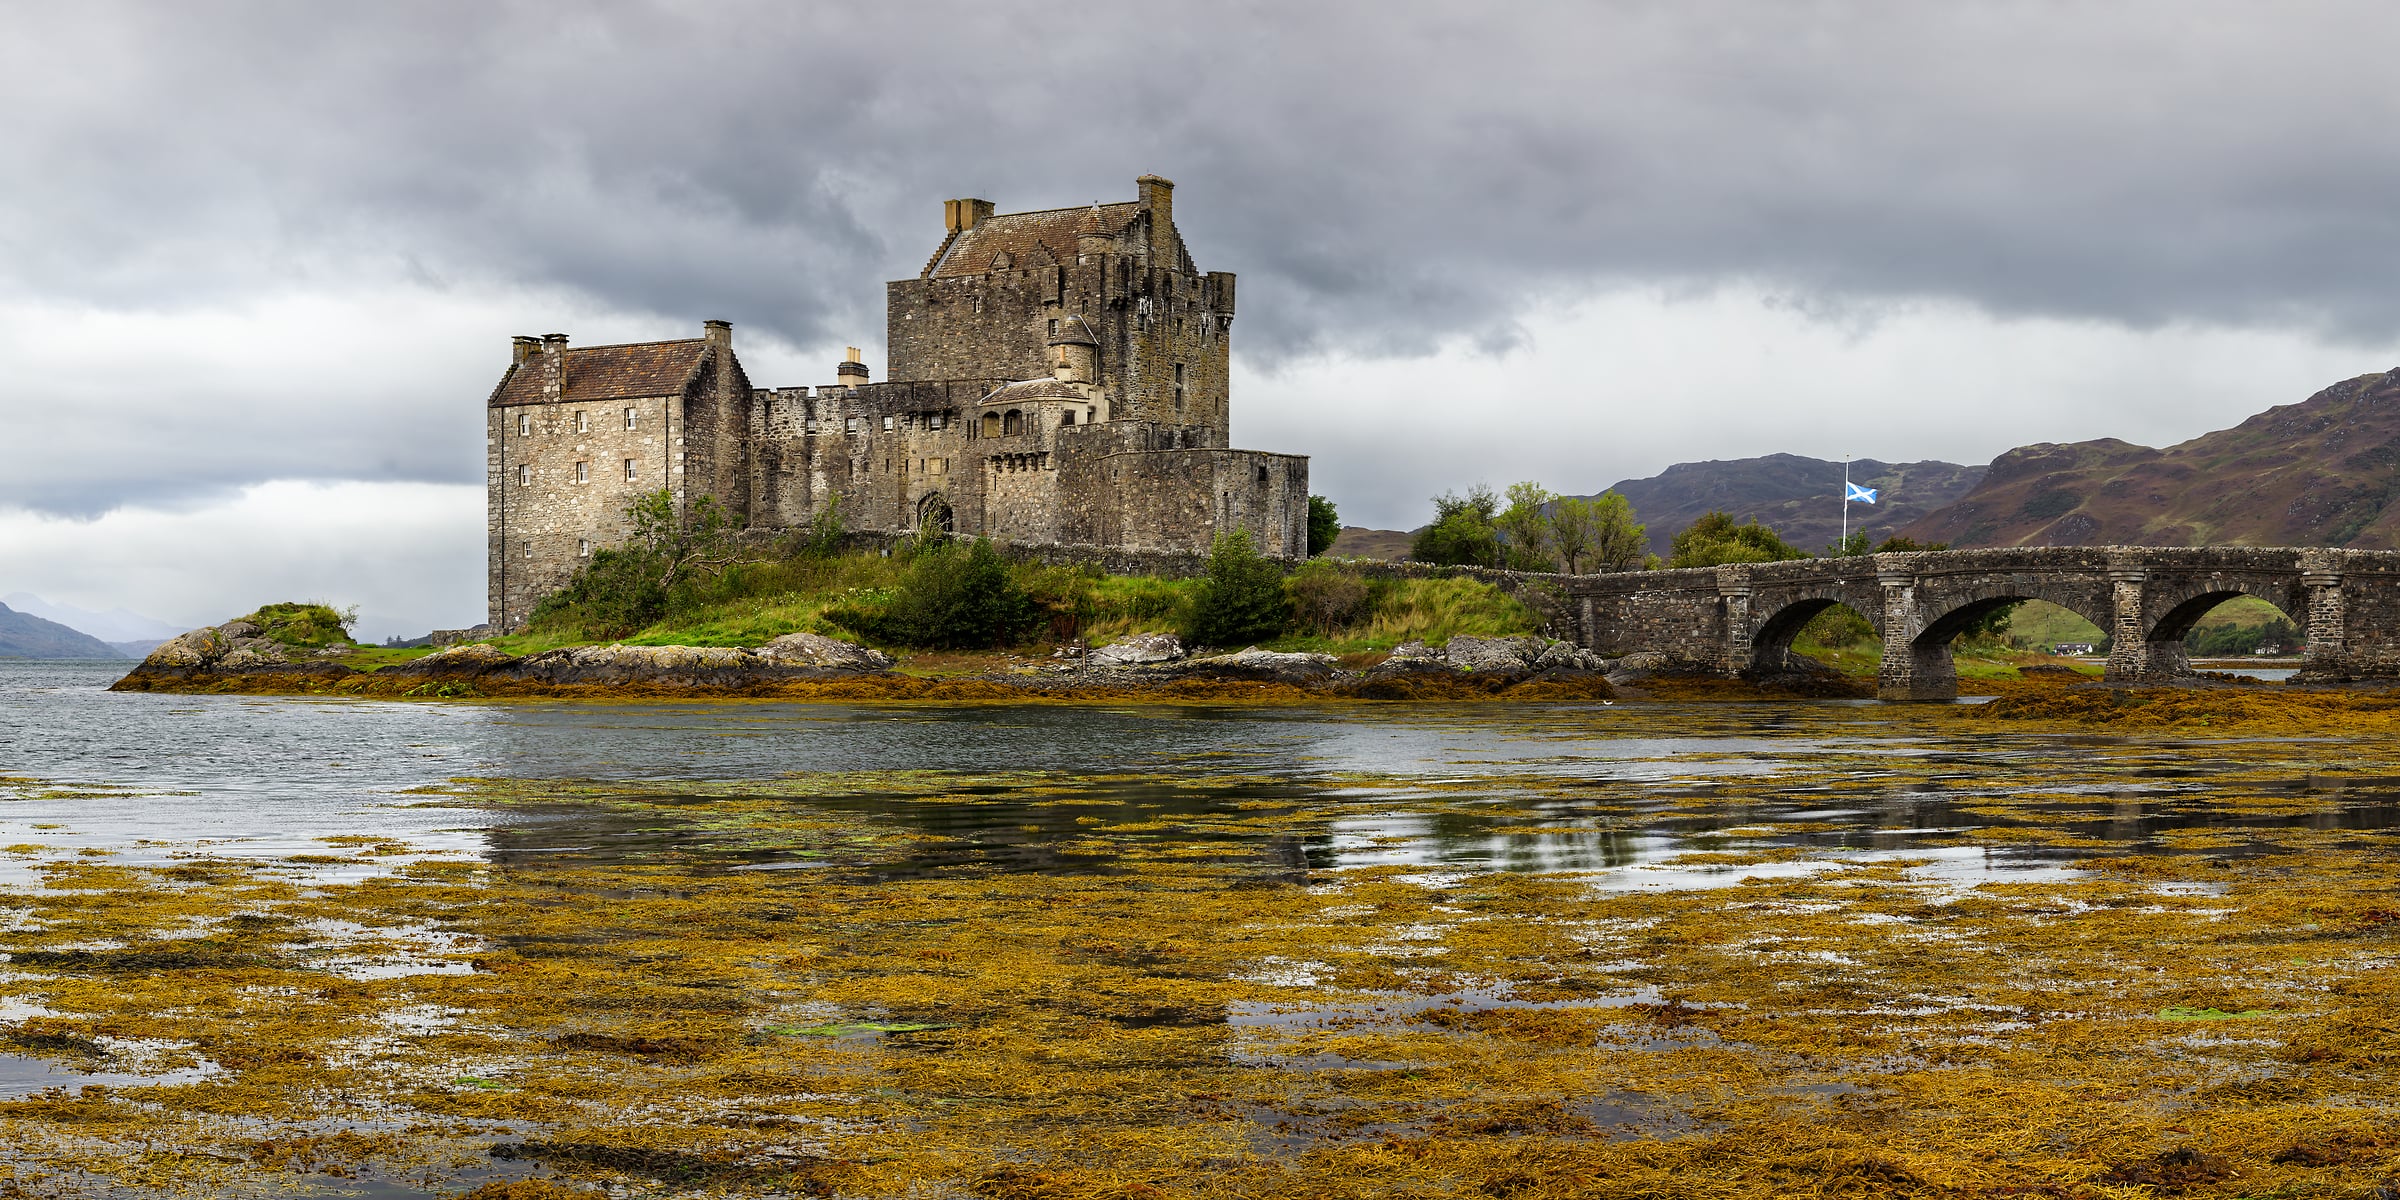 686 megapixels! A very high resolution, large-format VAST photo print of a Castle in Scotland; photograph created by Scott Dimond at Eilean Donan Castle, Dornie, Kyle of Lochalsh, United Kingdon